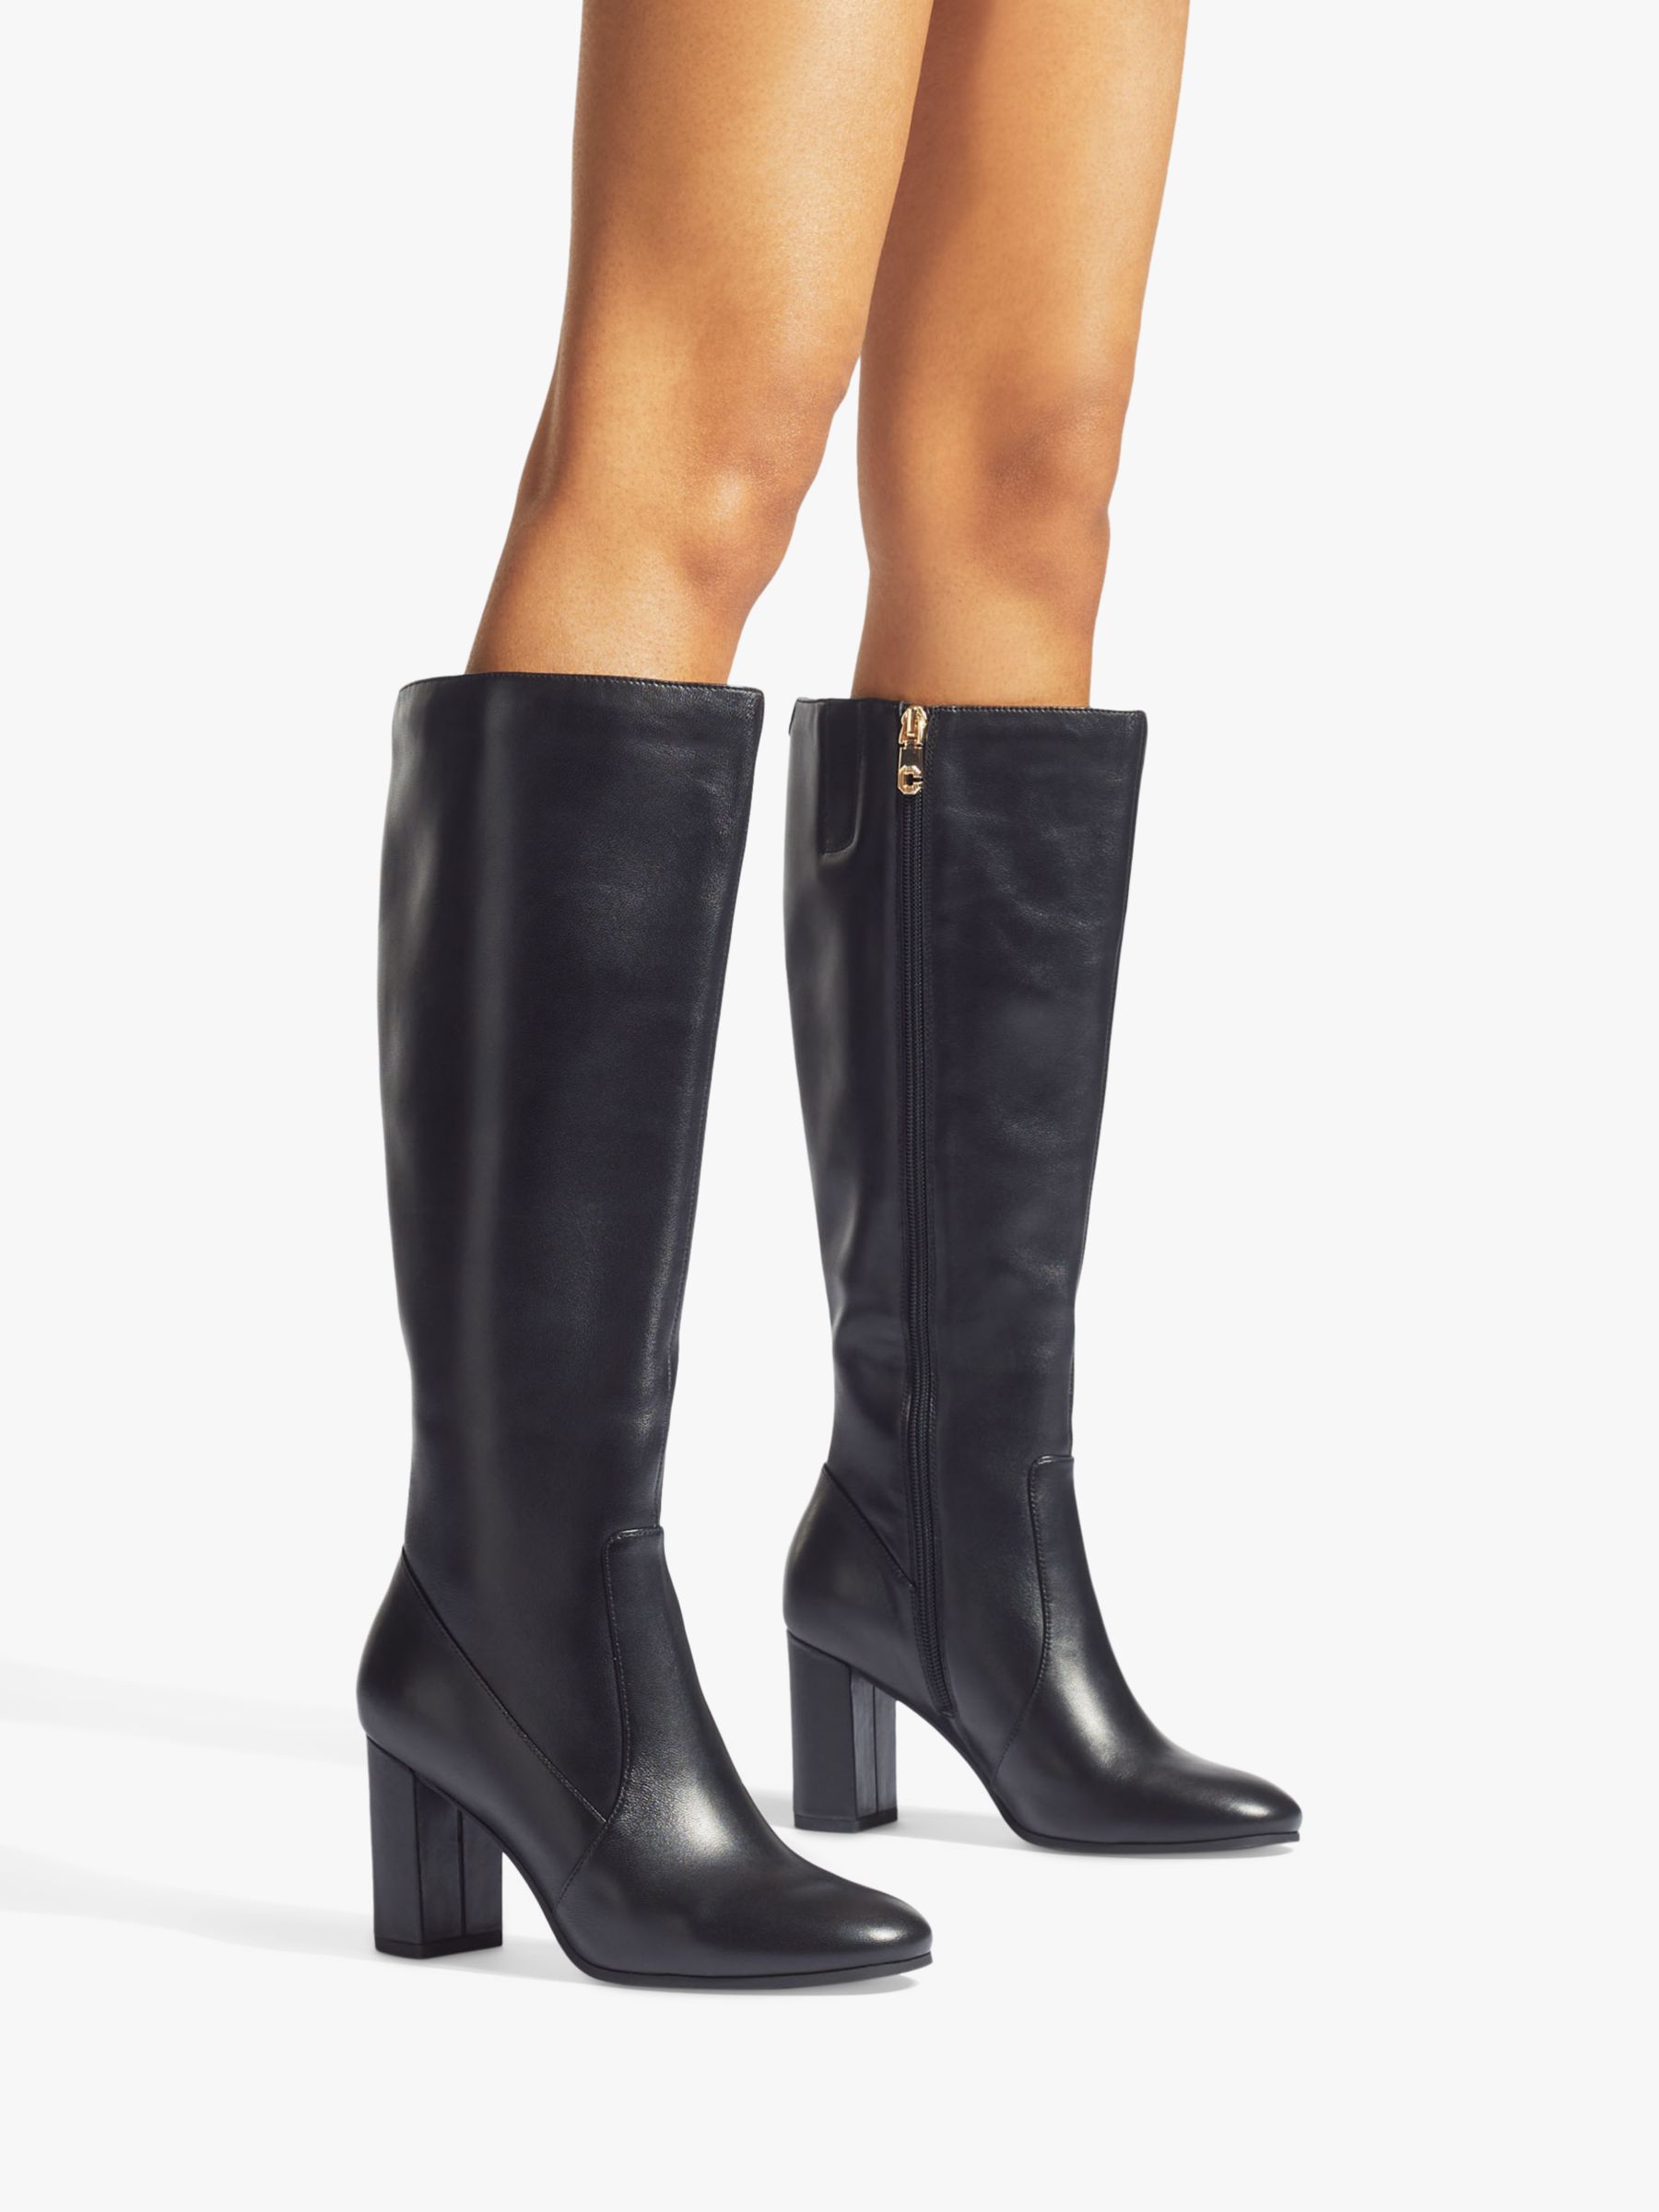 Carvela Pose Leather Knee High Boots, Black, 6